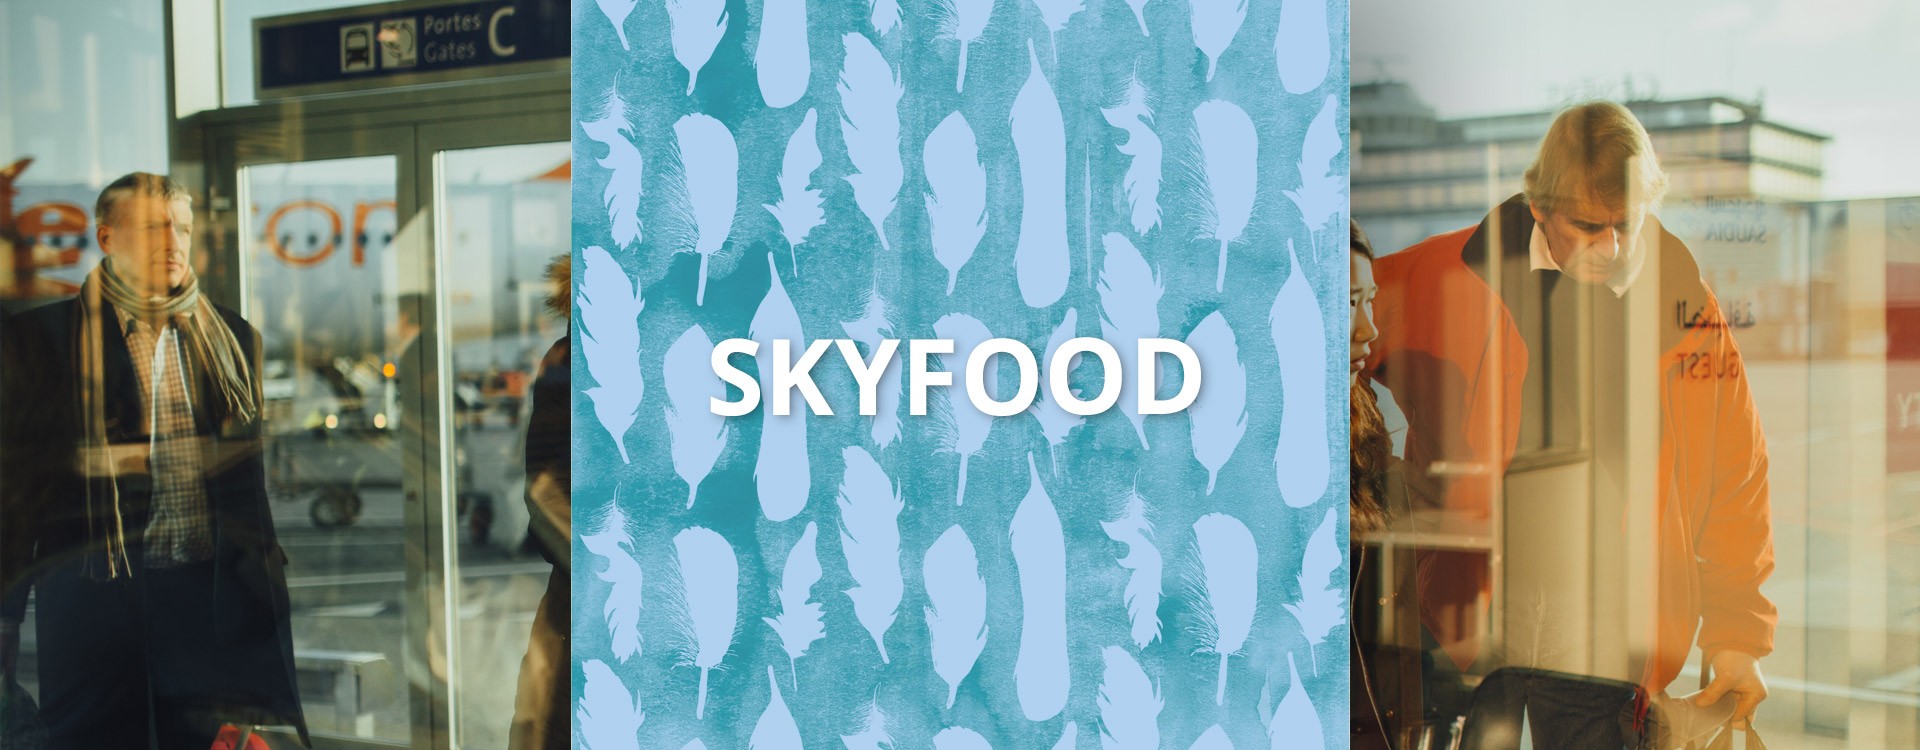 SkyFood